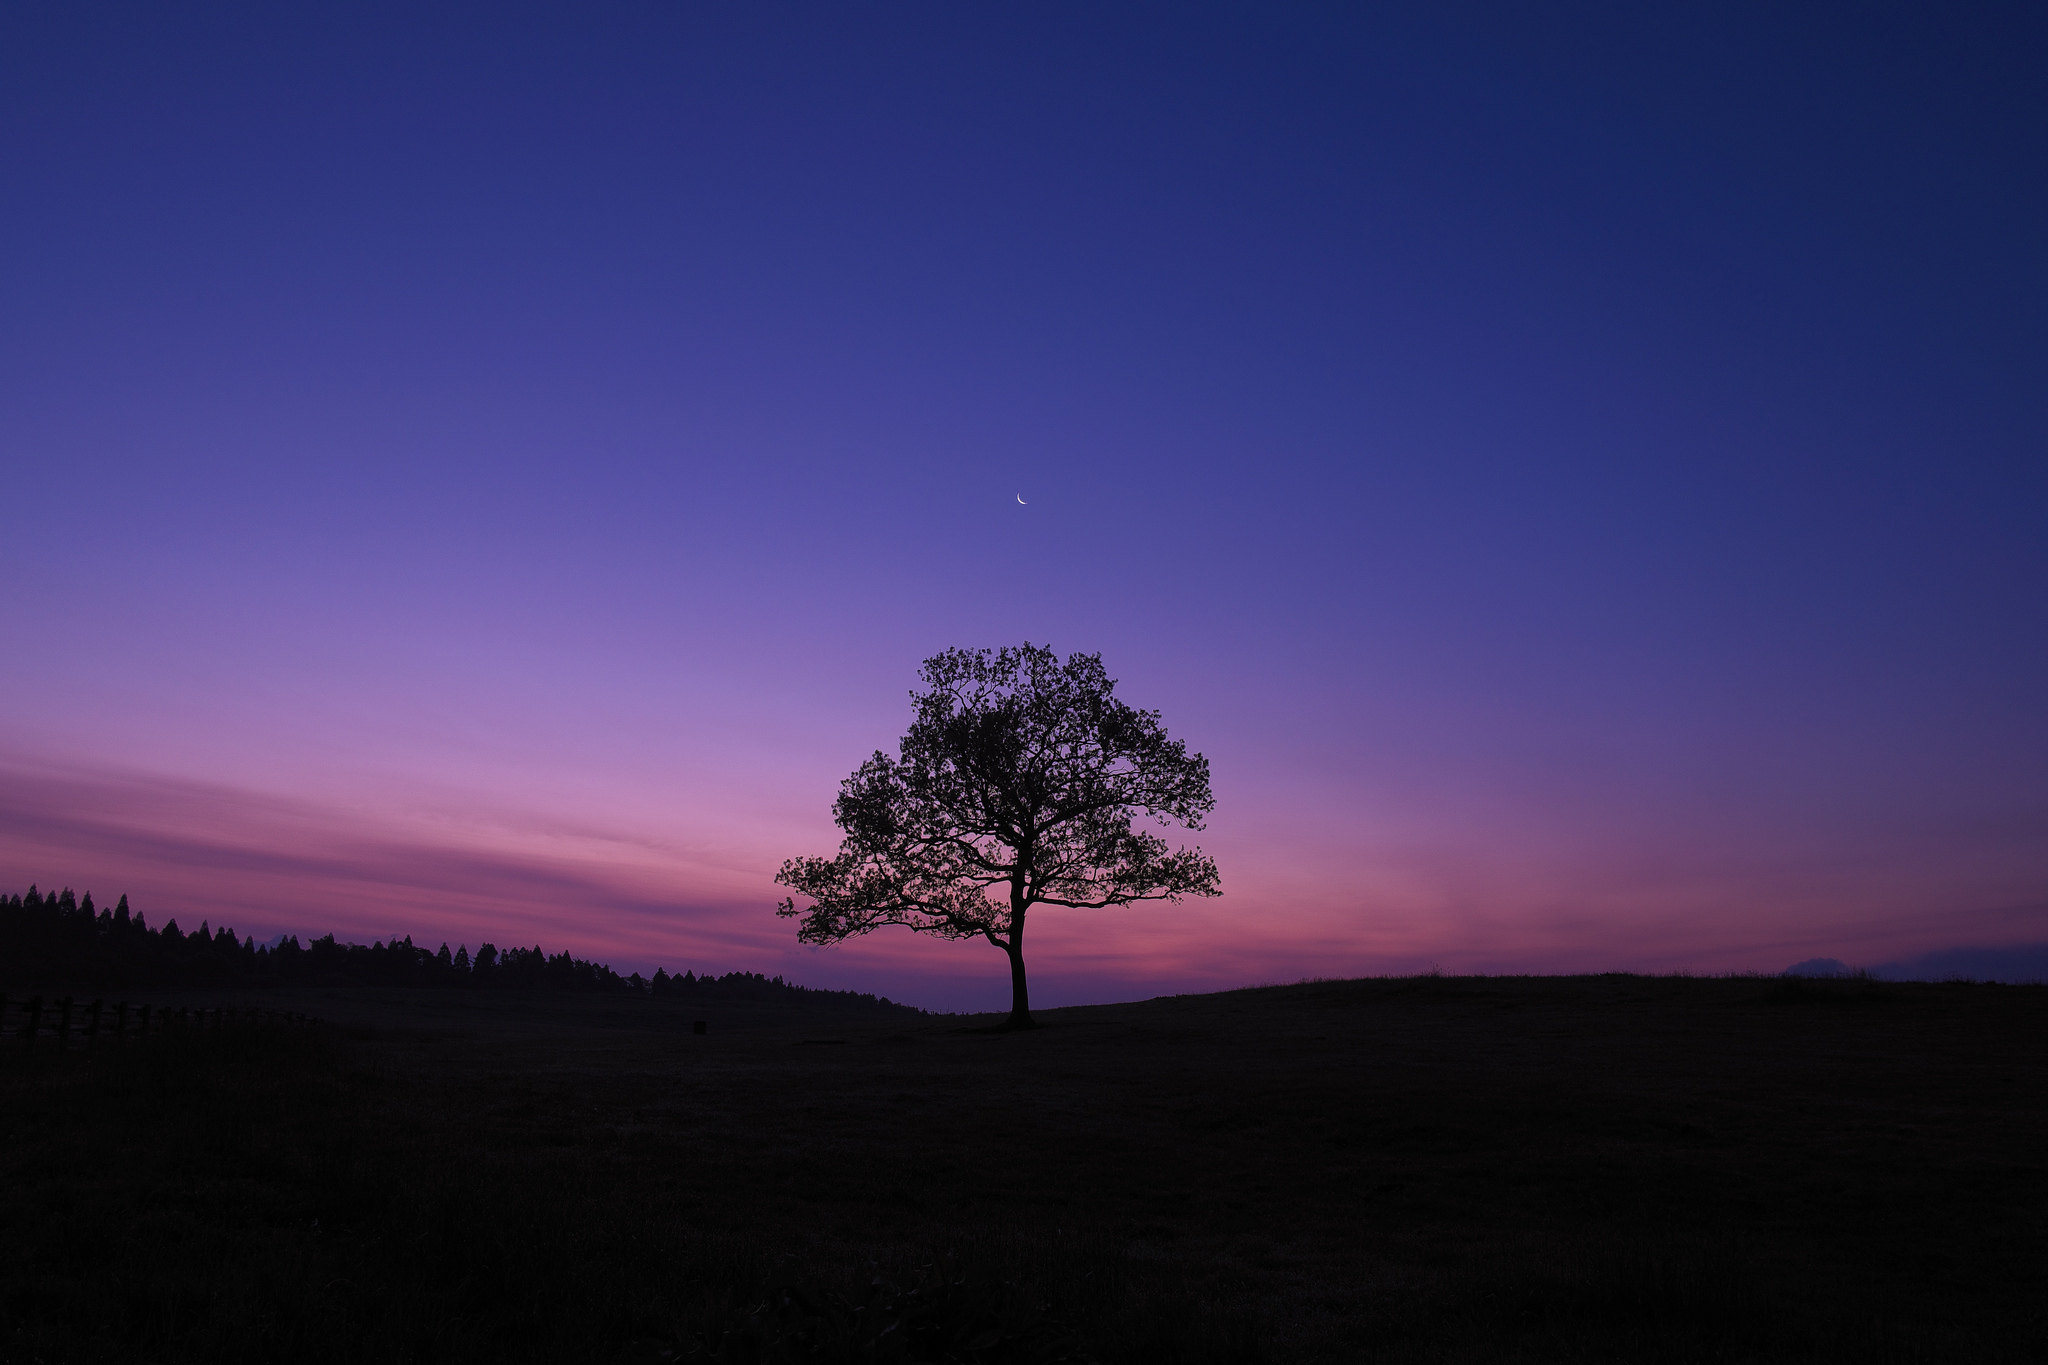 General 2048x1365 dark sky blue purple nature landscape trees night crescent moon